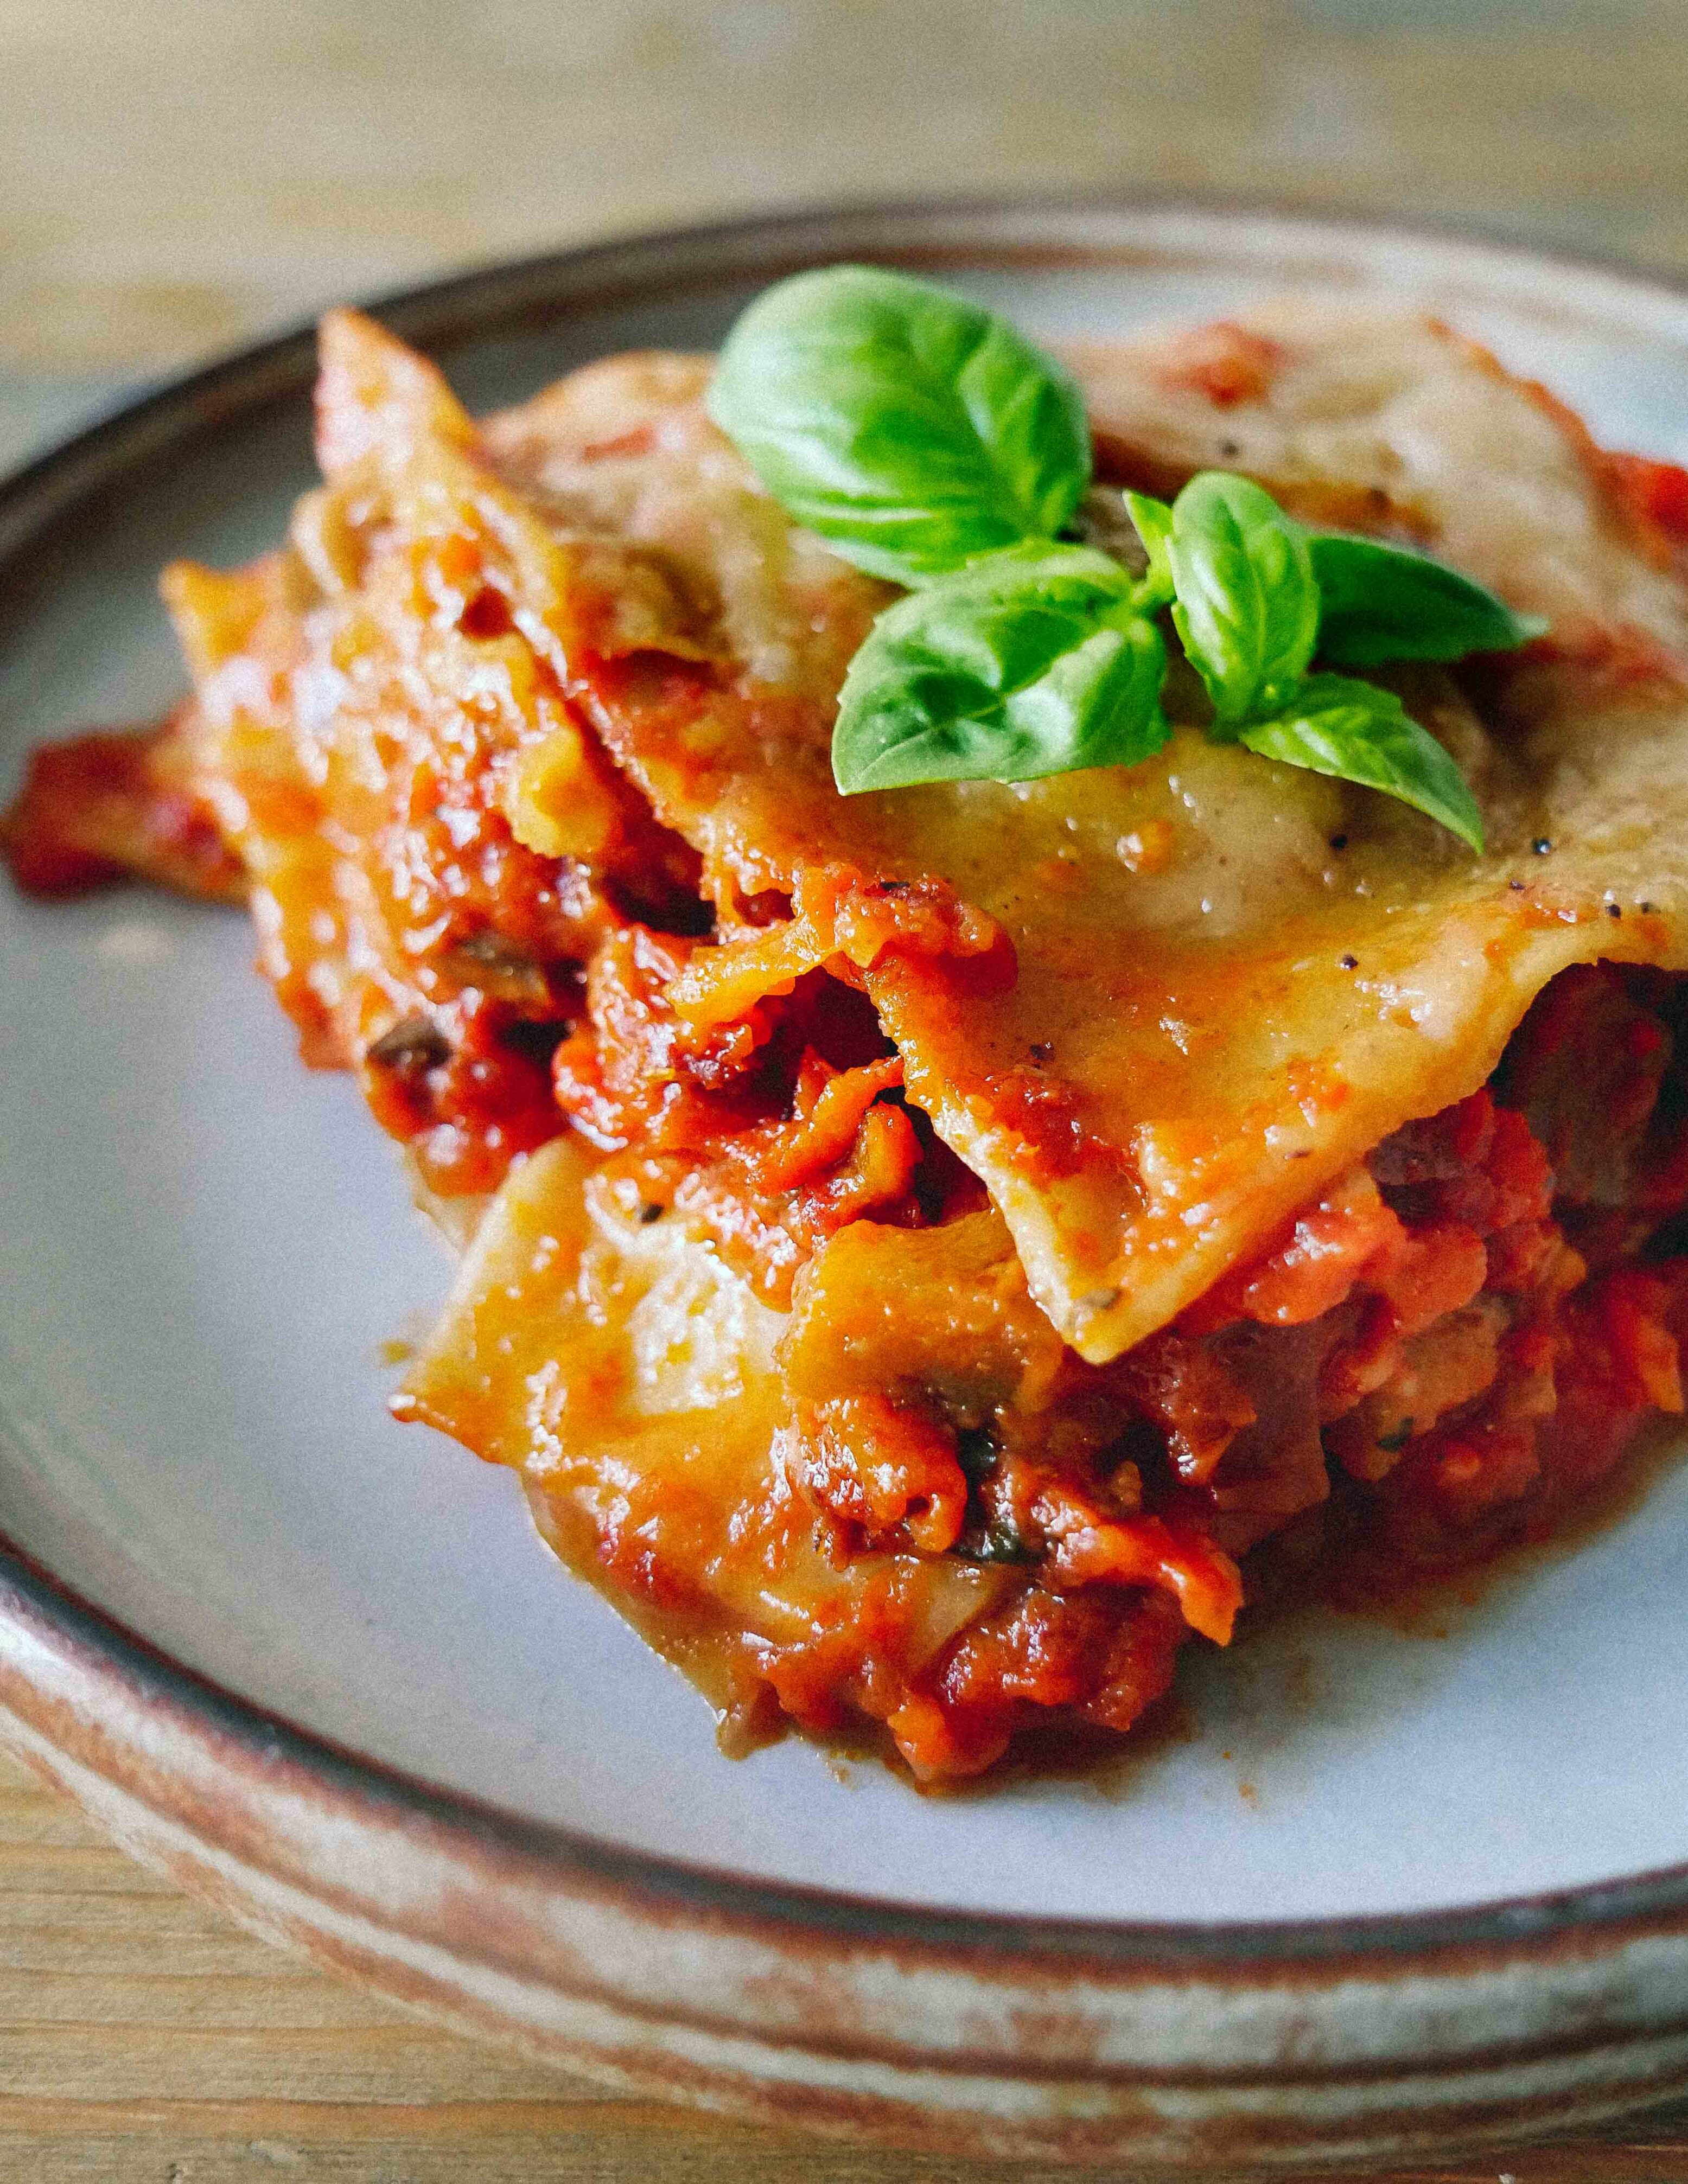 Vegan Lasagna – The ultimate homemade Italian recipe ↓